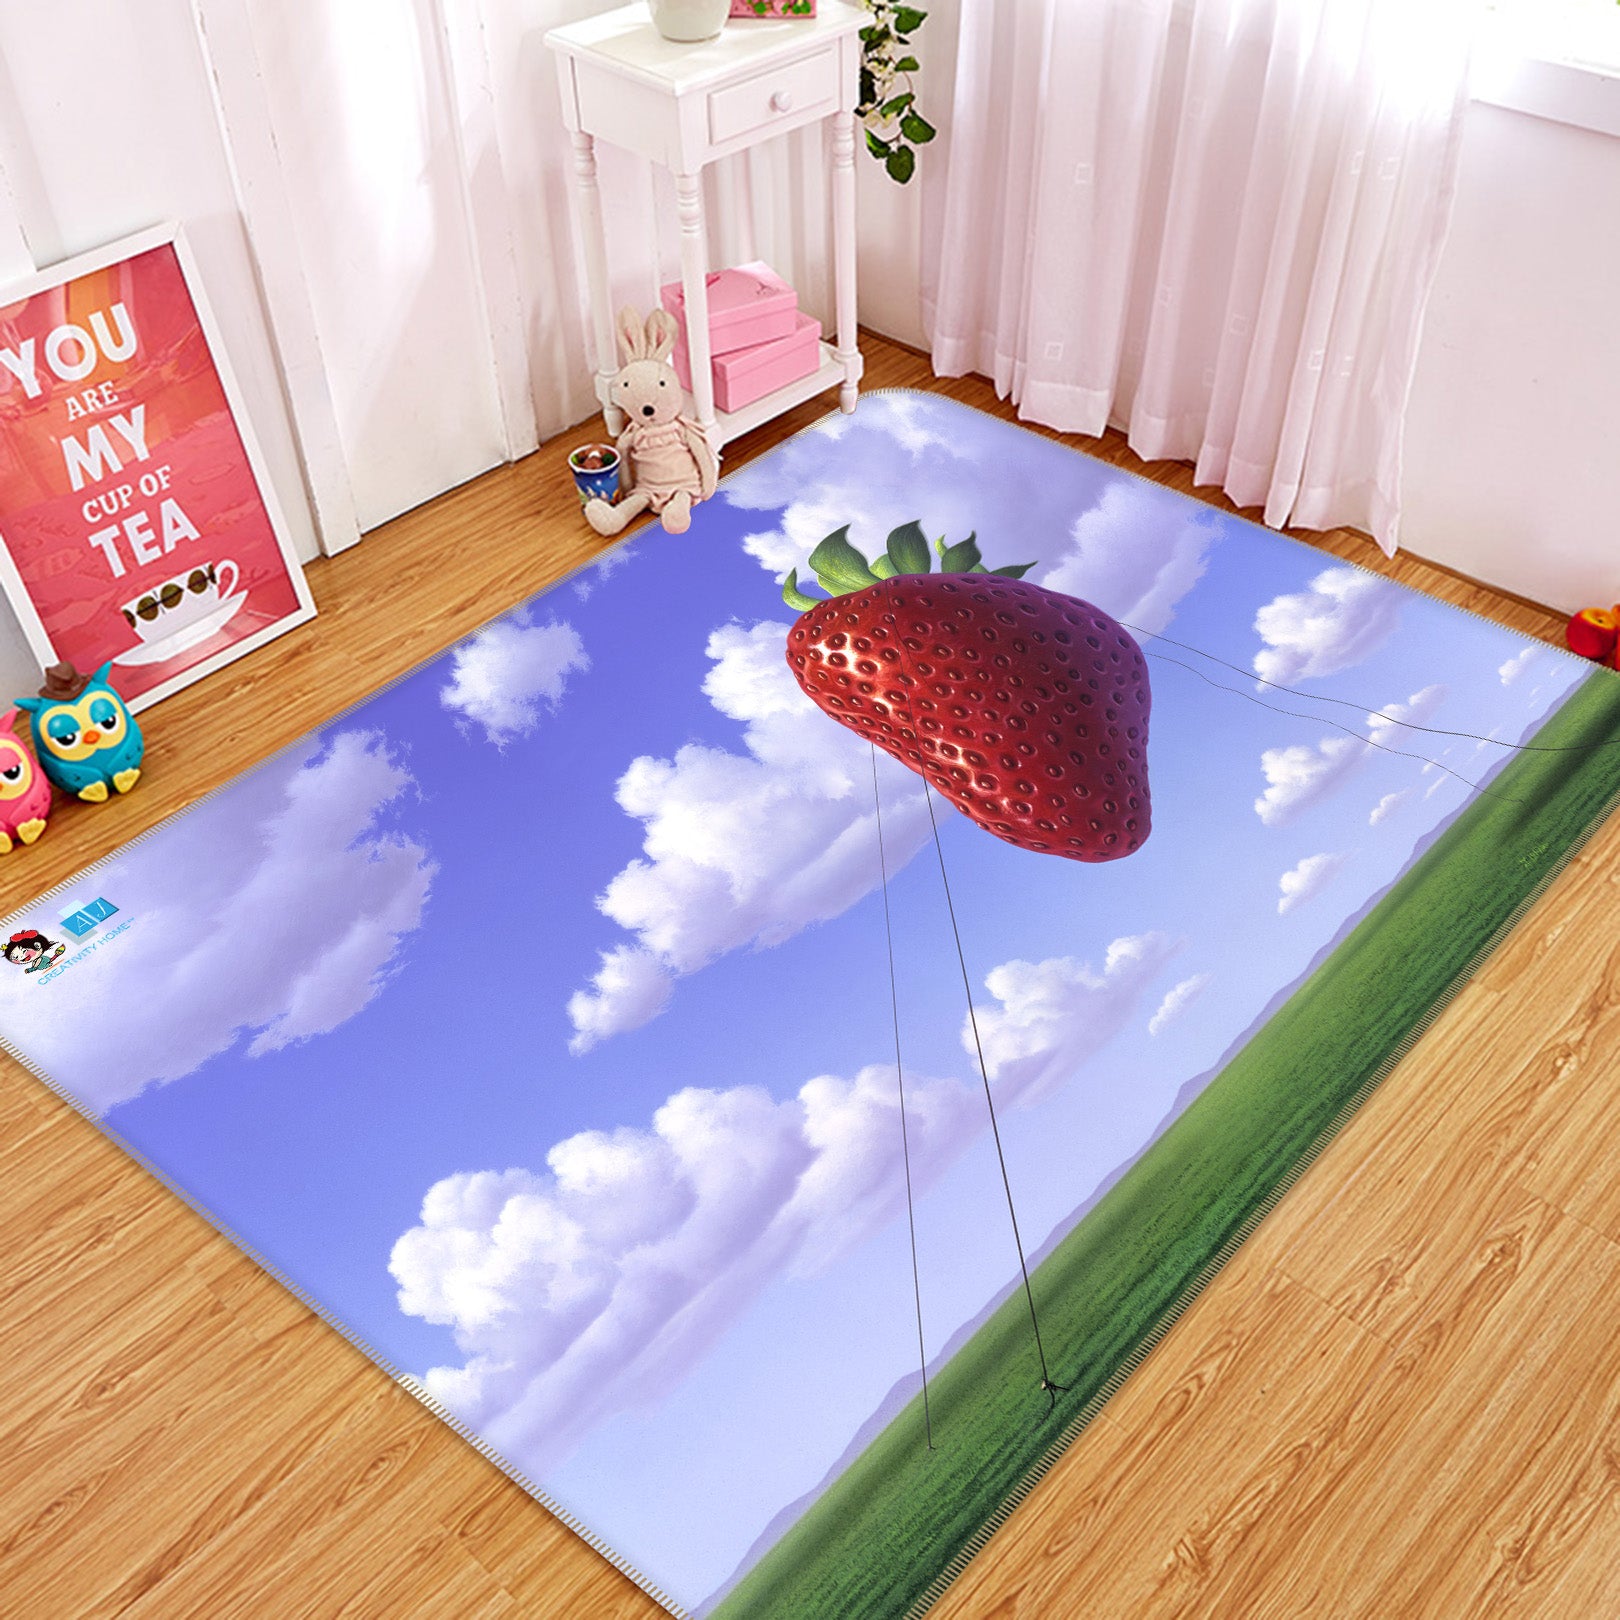 3D Sky Strawberry 85062 Jerry LoFaro Rug Non Slip Rug Mat